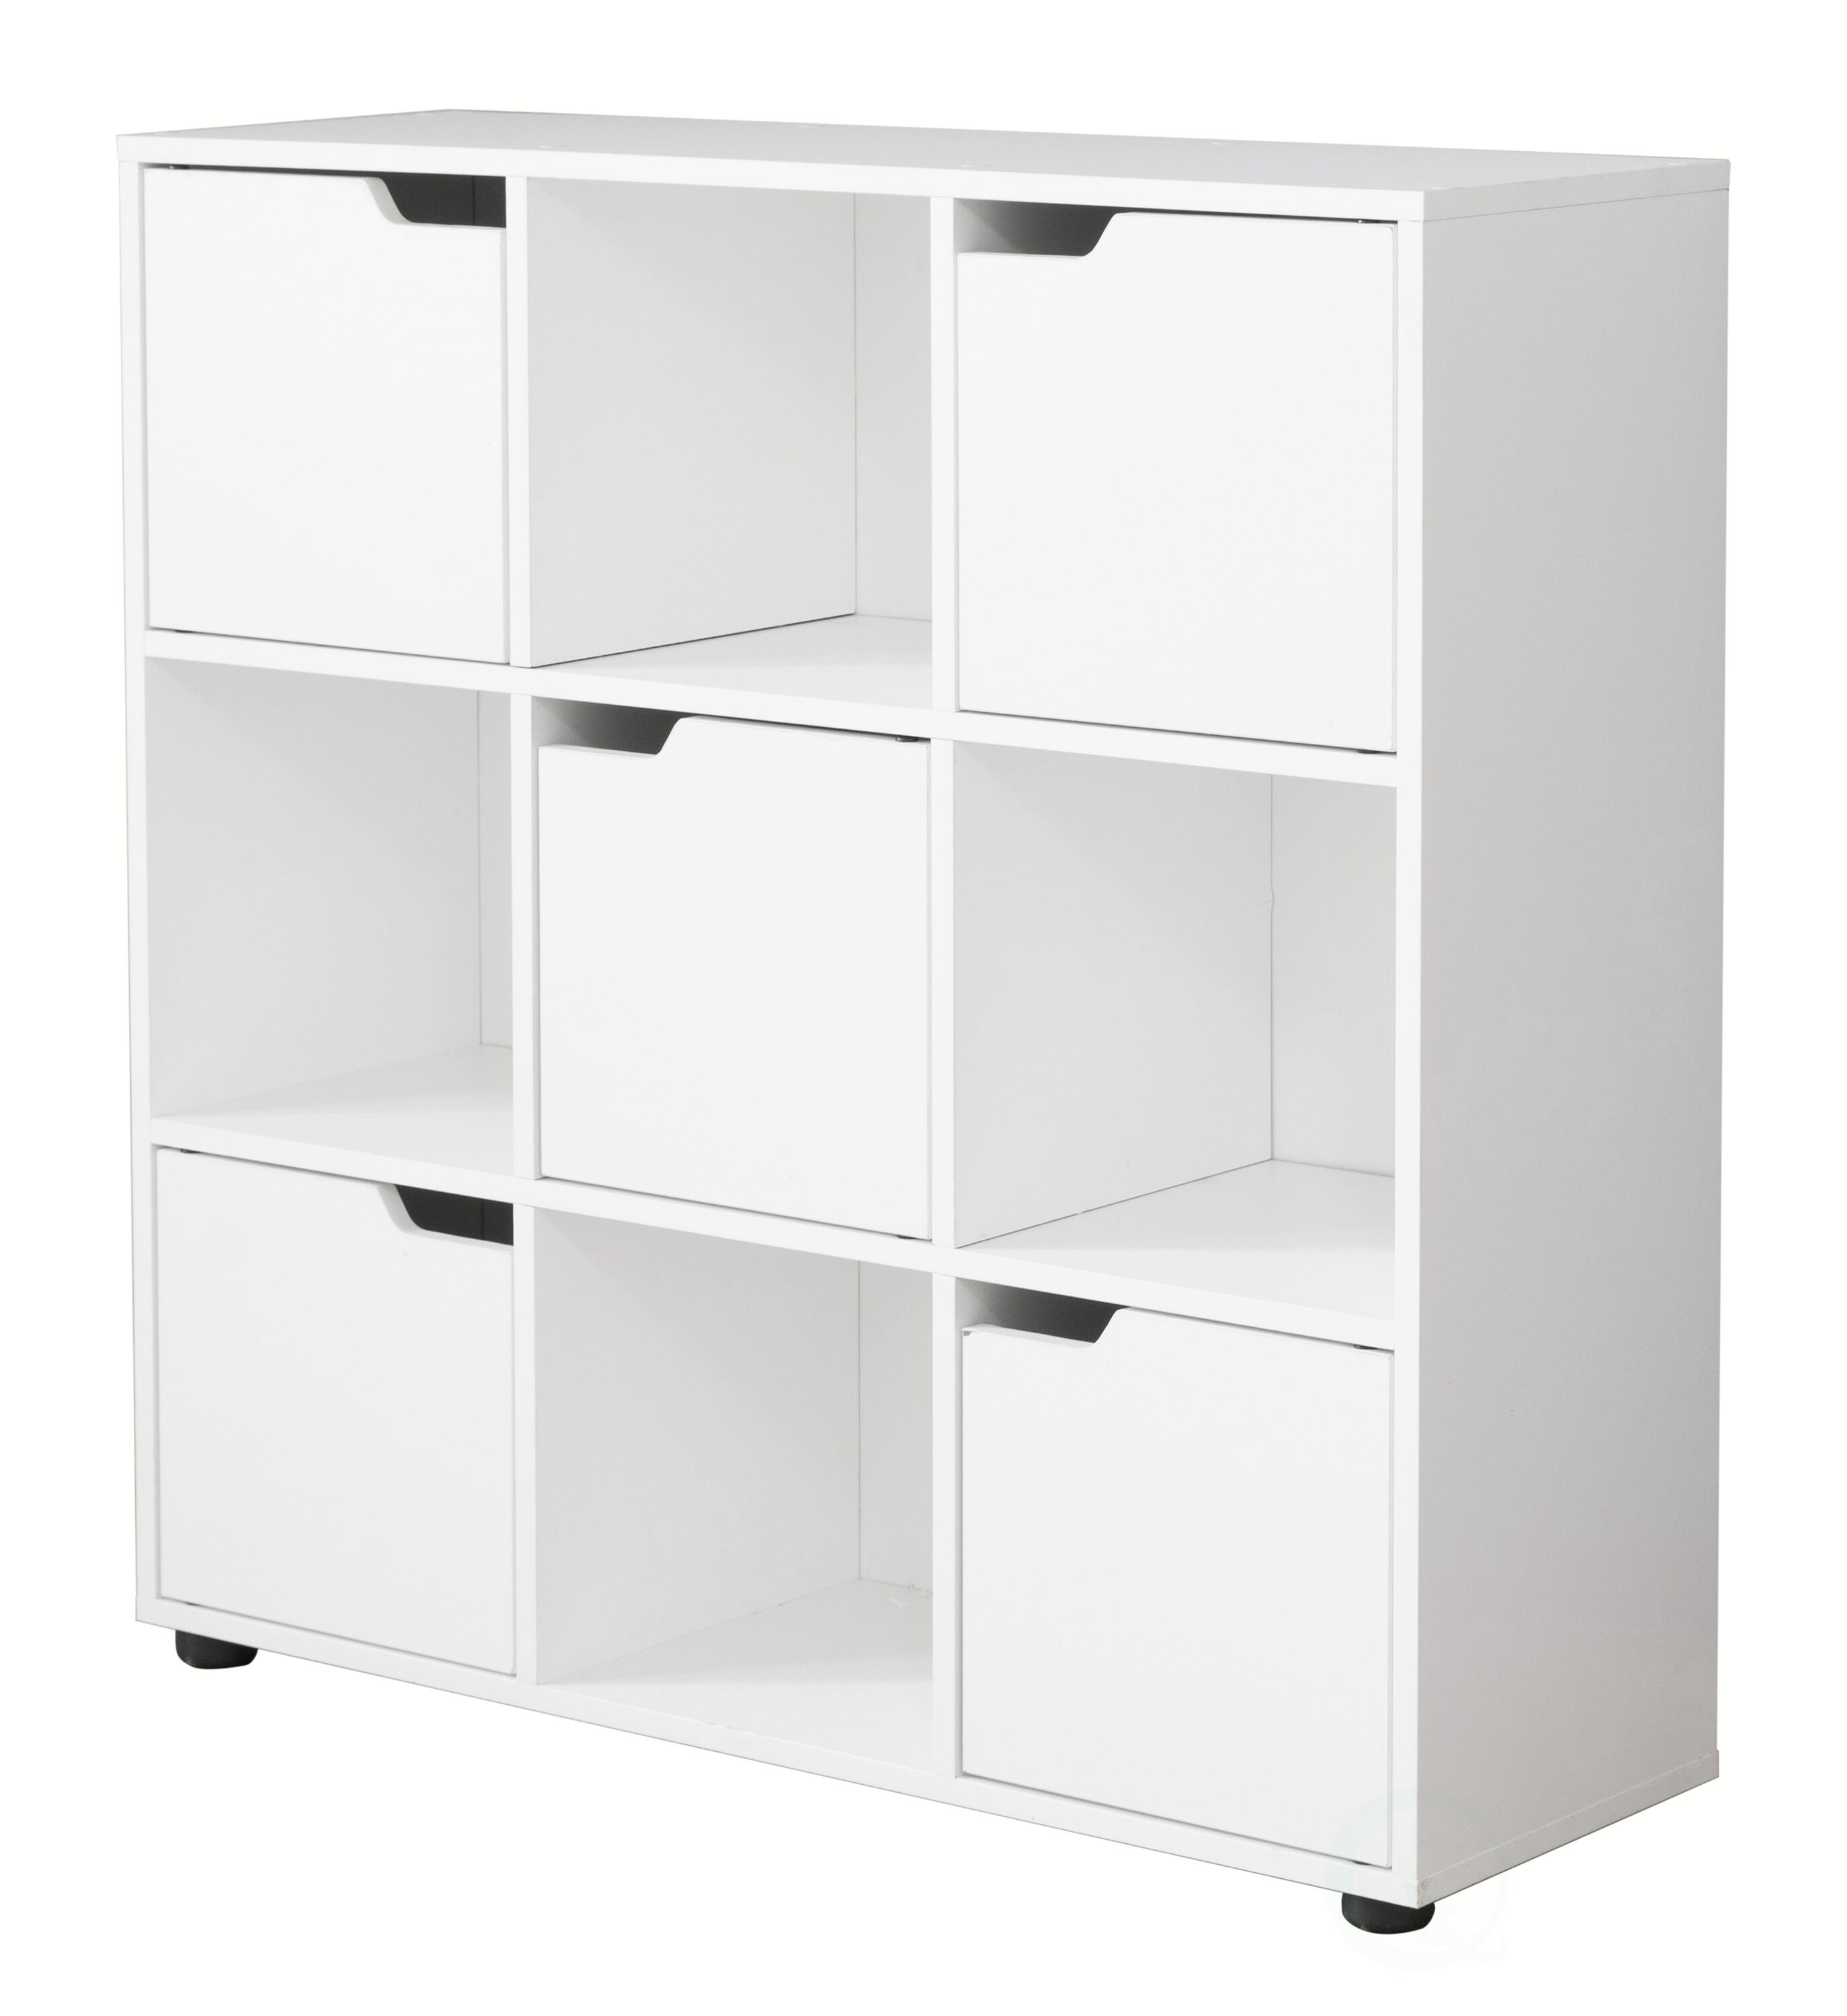 6 Cube Wooden Bookcase Shelving Display Shelves Storage Unit Wood Shelf Door